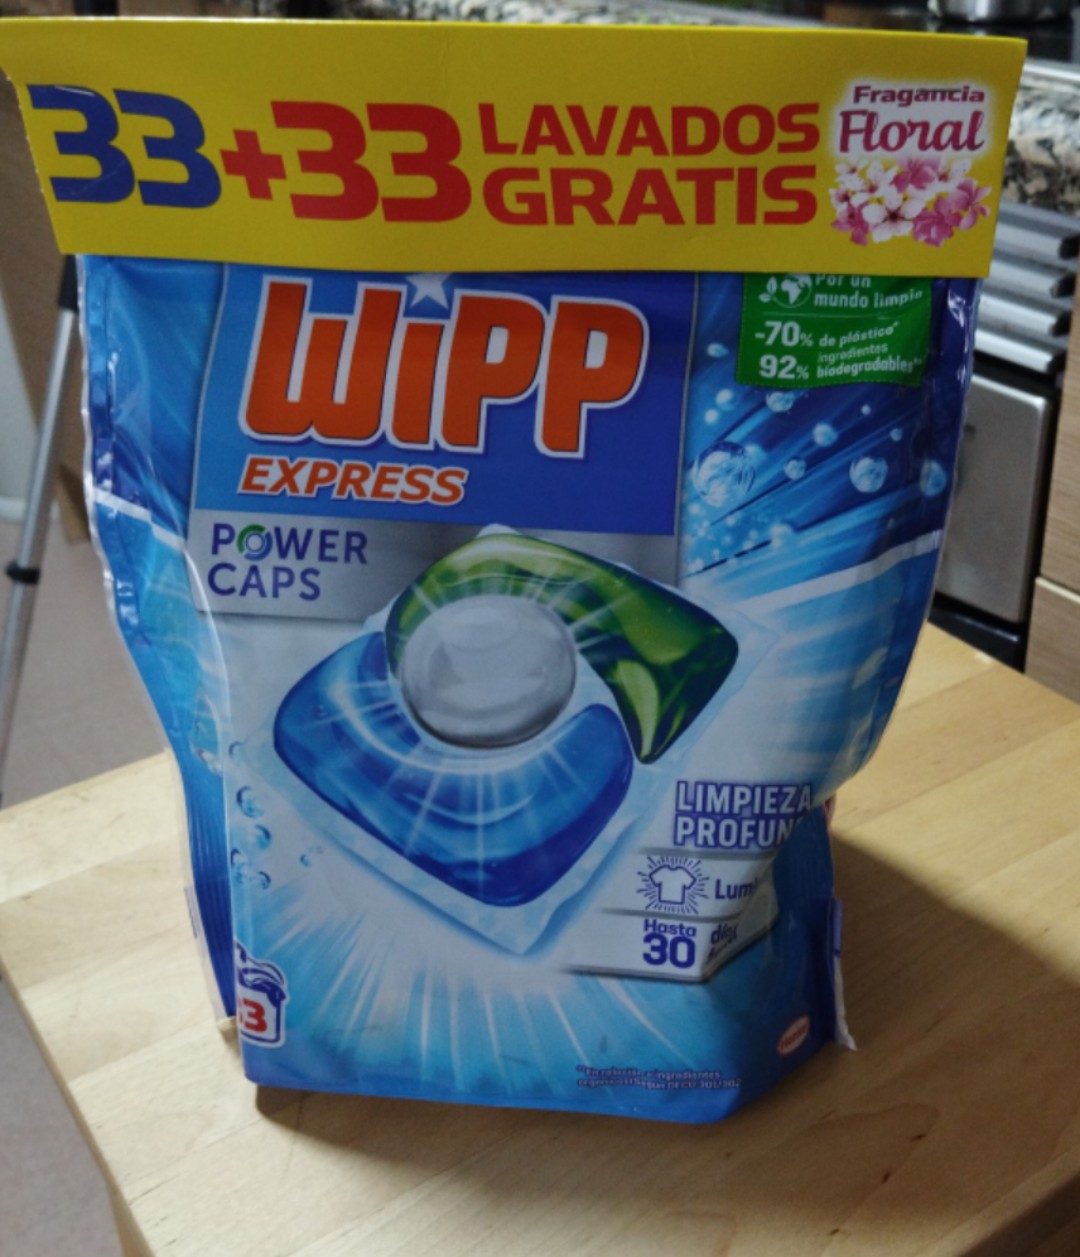 Wipp express detergente power caps 33 + 33 GRATIS de fragancia floral 